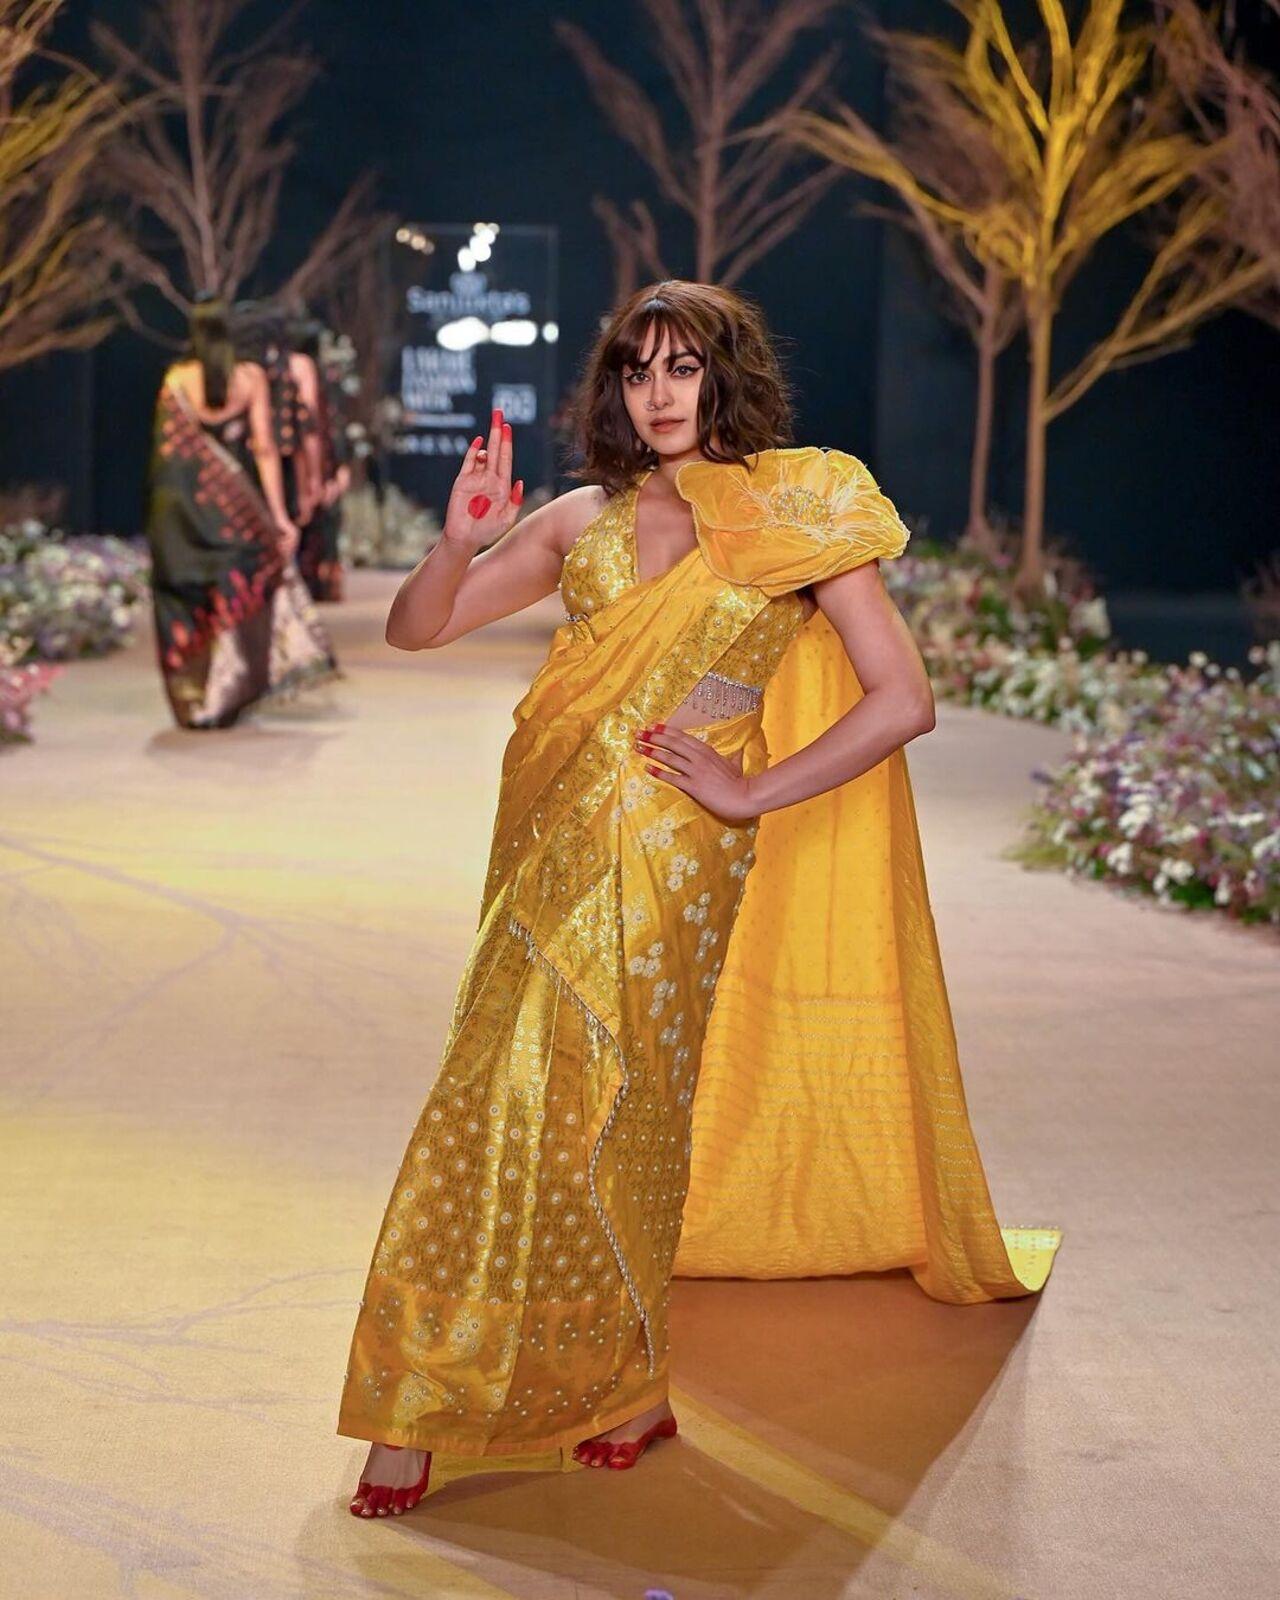 Adah Sharma poses in a striking yellow saree